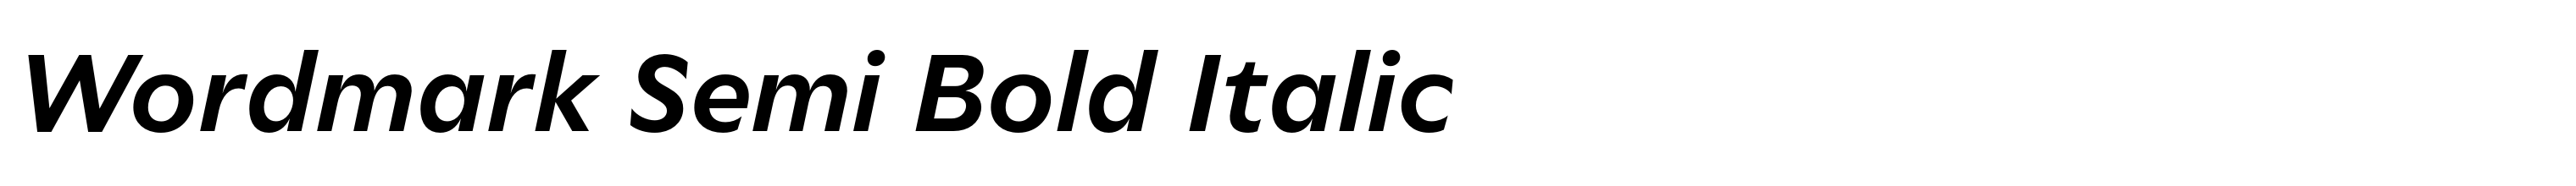 Wordmark Semi Bold Italic